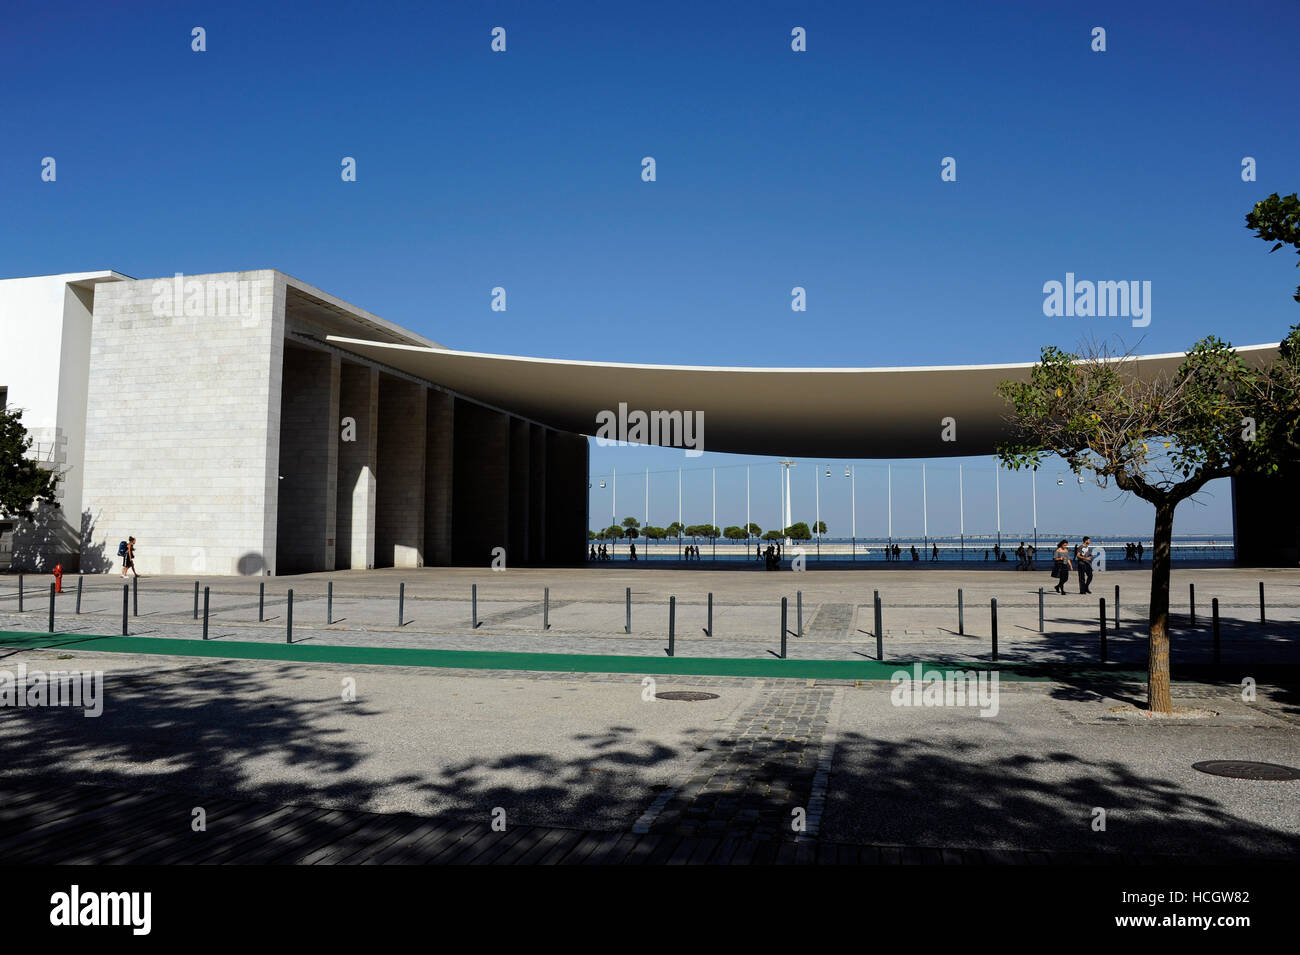 Pavilhao de Portugal, Pavilion of Portugal, Alvaro Siza architect, Parque das Nacoes, Nation's Park, Lisboa, Lisbon, Portugal Stock Photo